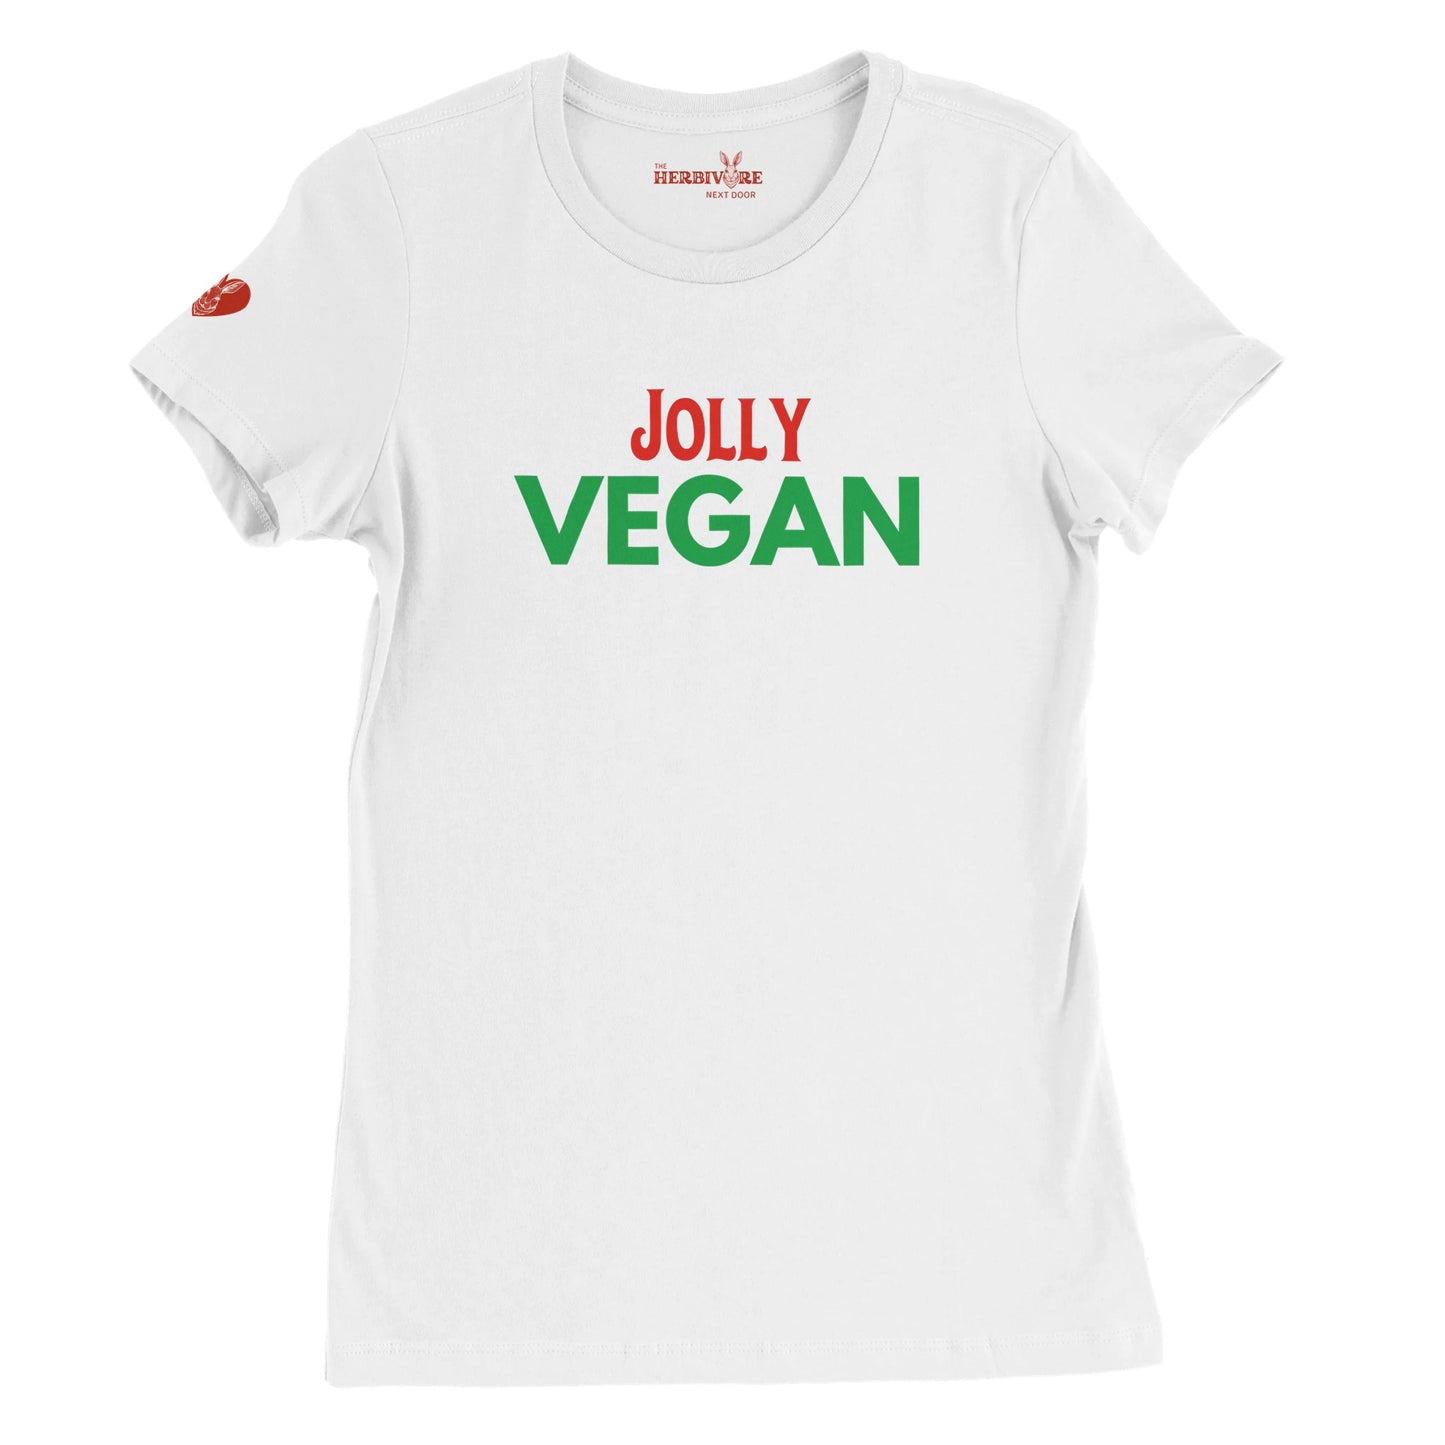 Jolly Vegan - Women's Style